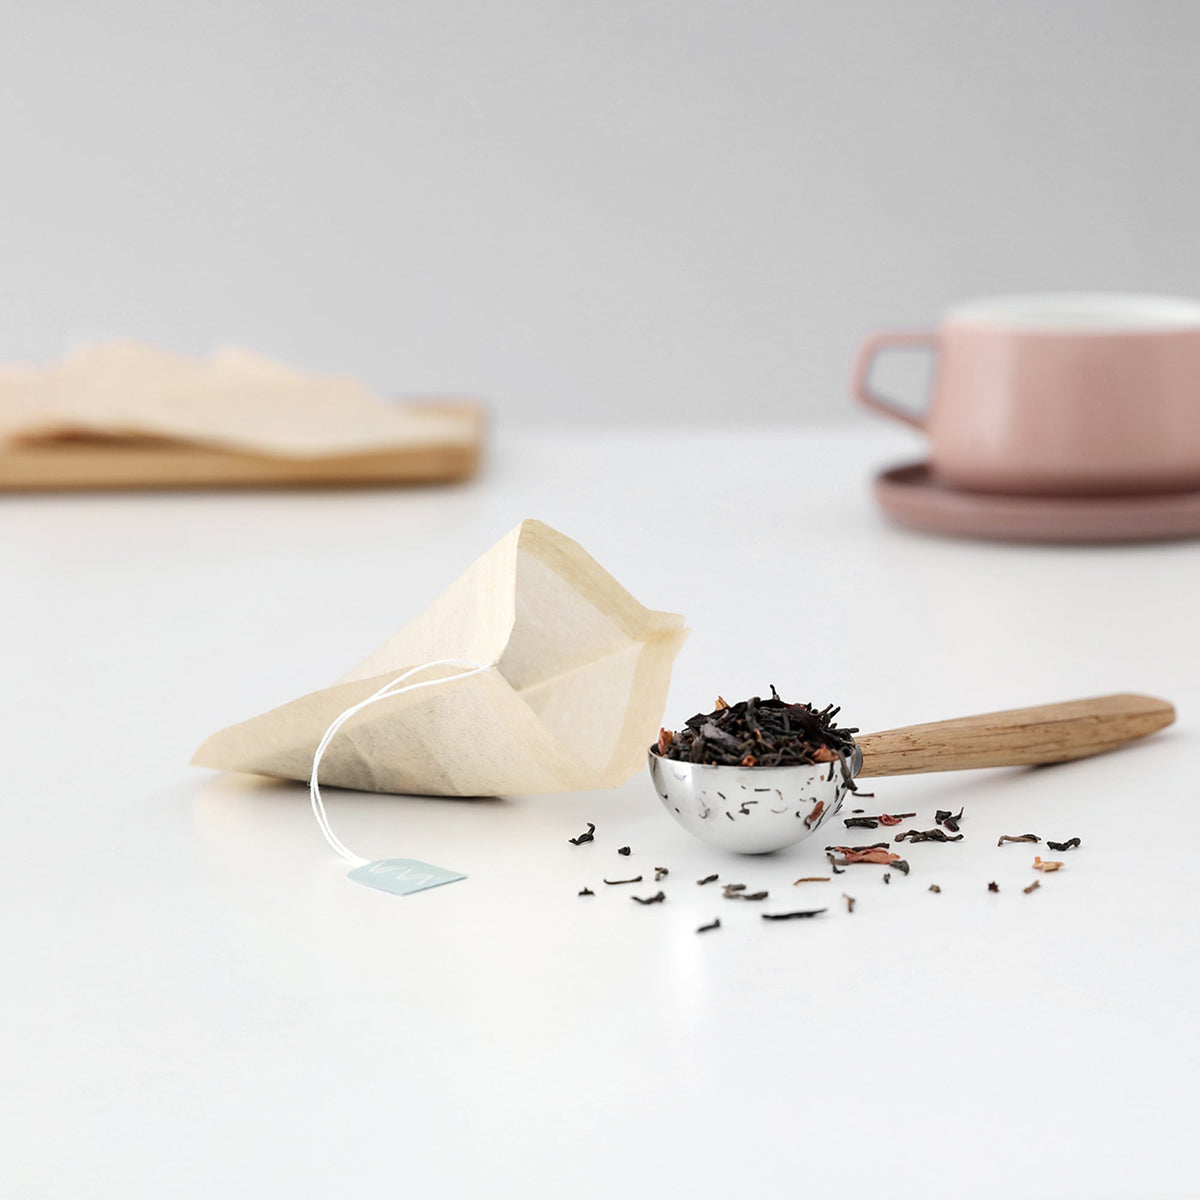 PURE™ Box of 50 Tea Filter Bags Accessories VIVA Scandinavia 